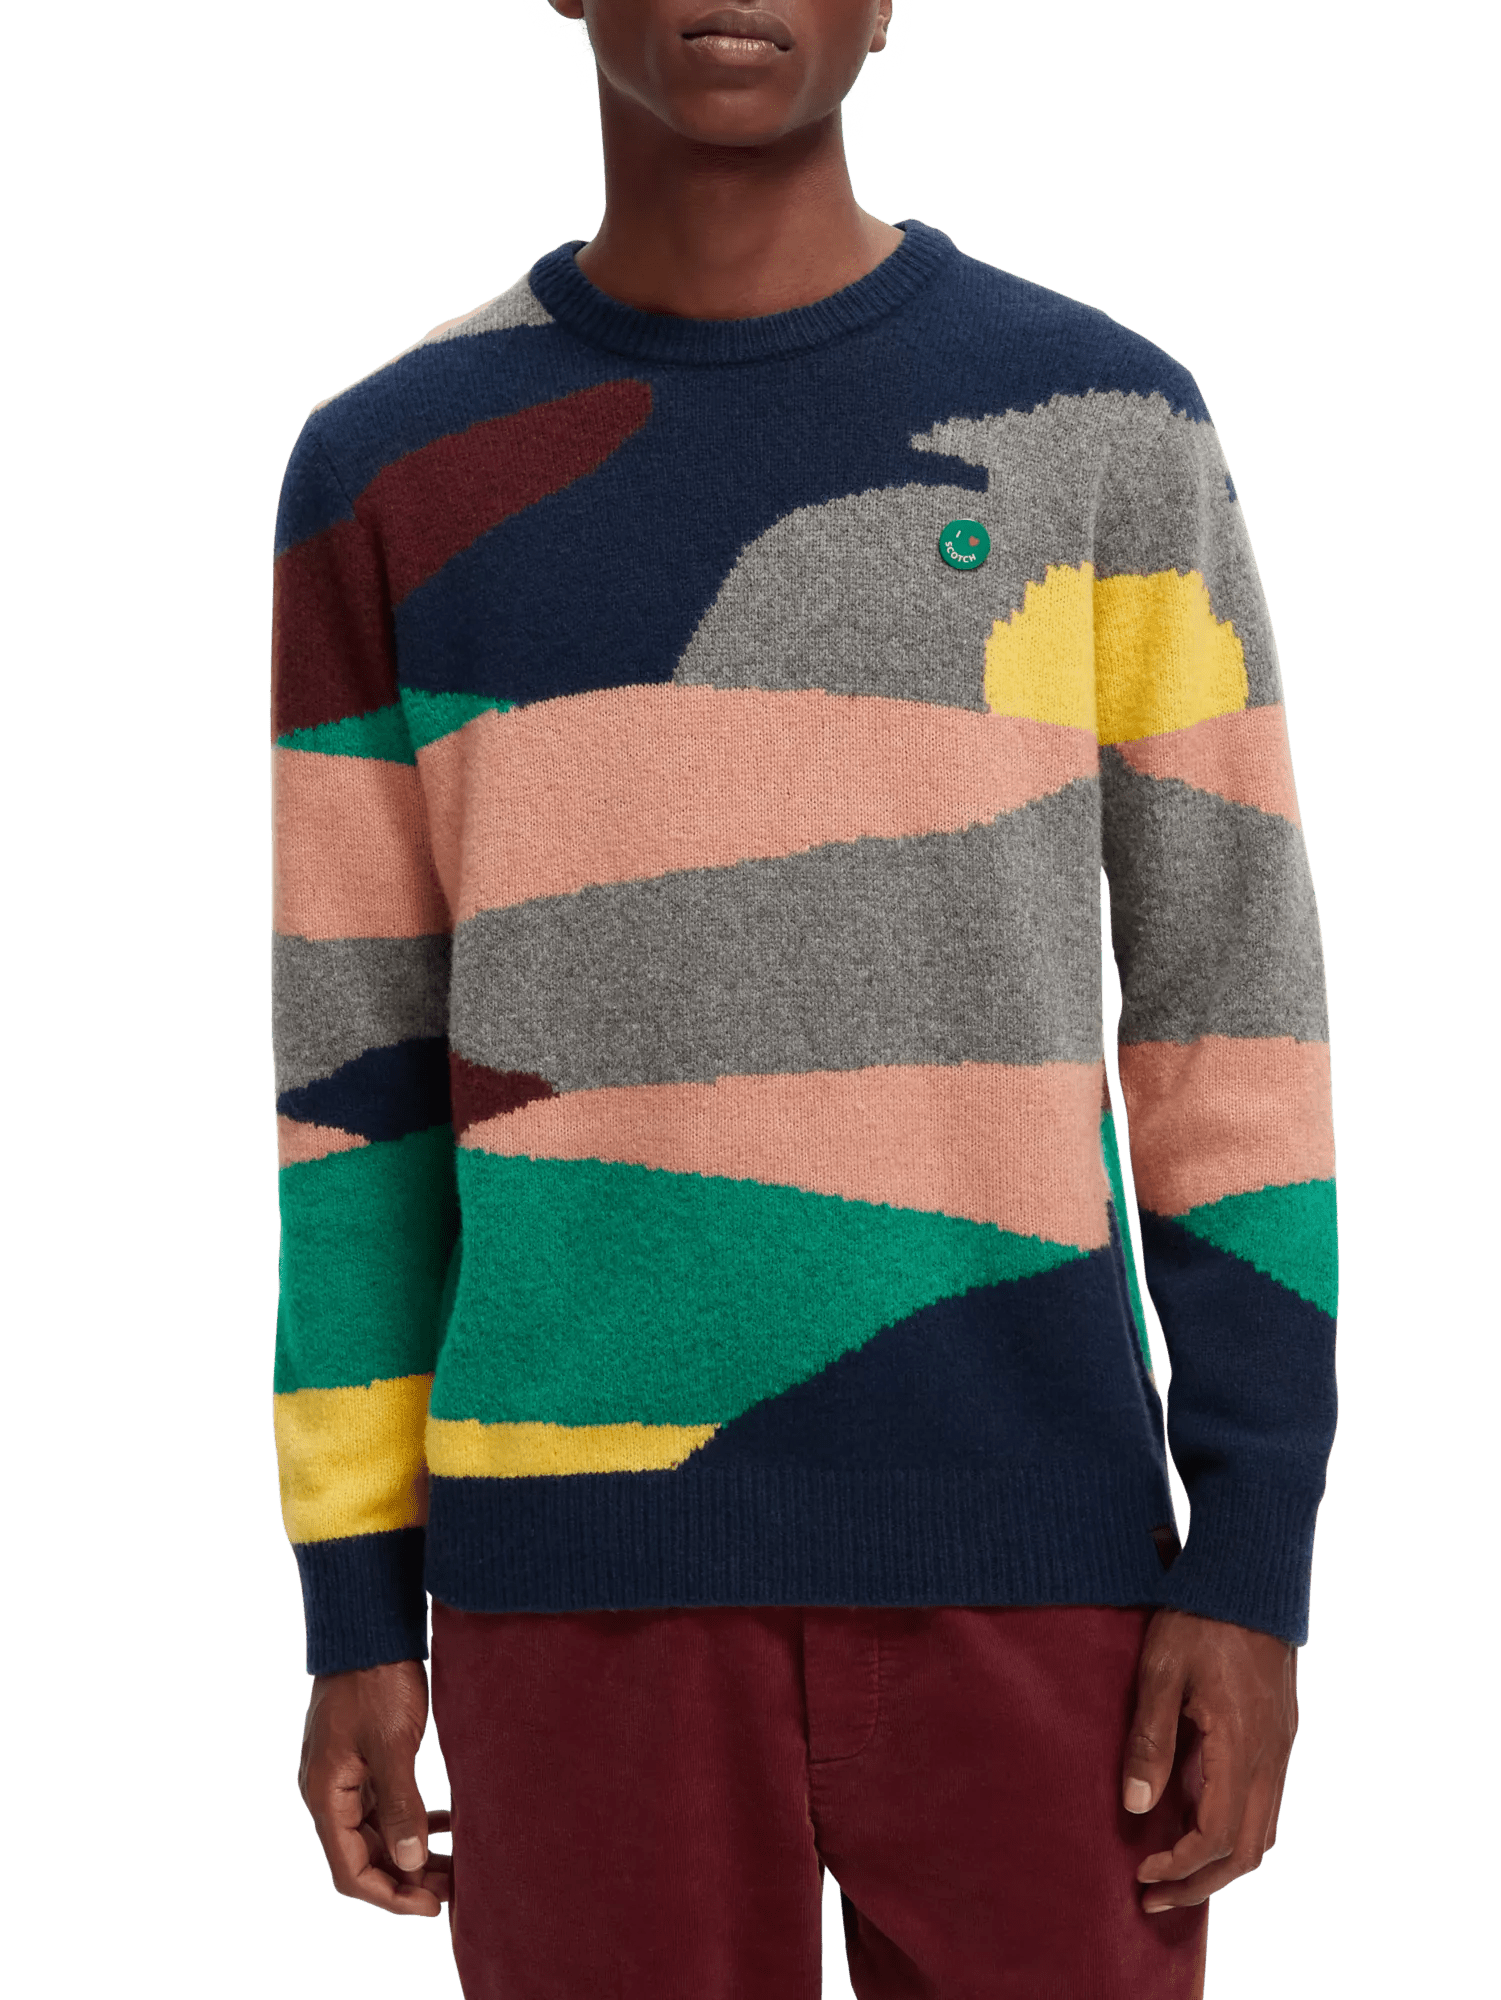 NWT Scotch & Soda Men's Camo Jacquard Sweater Sz M $198 black green